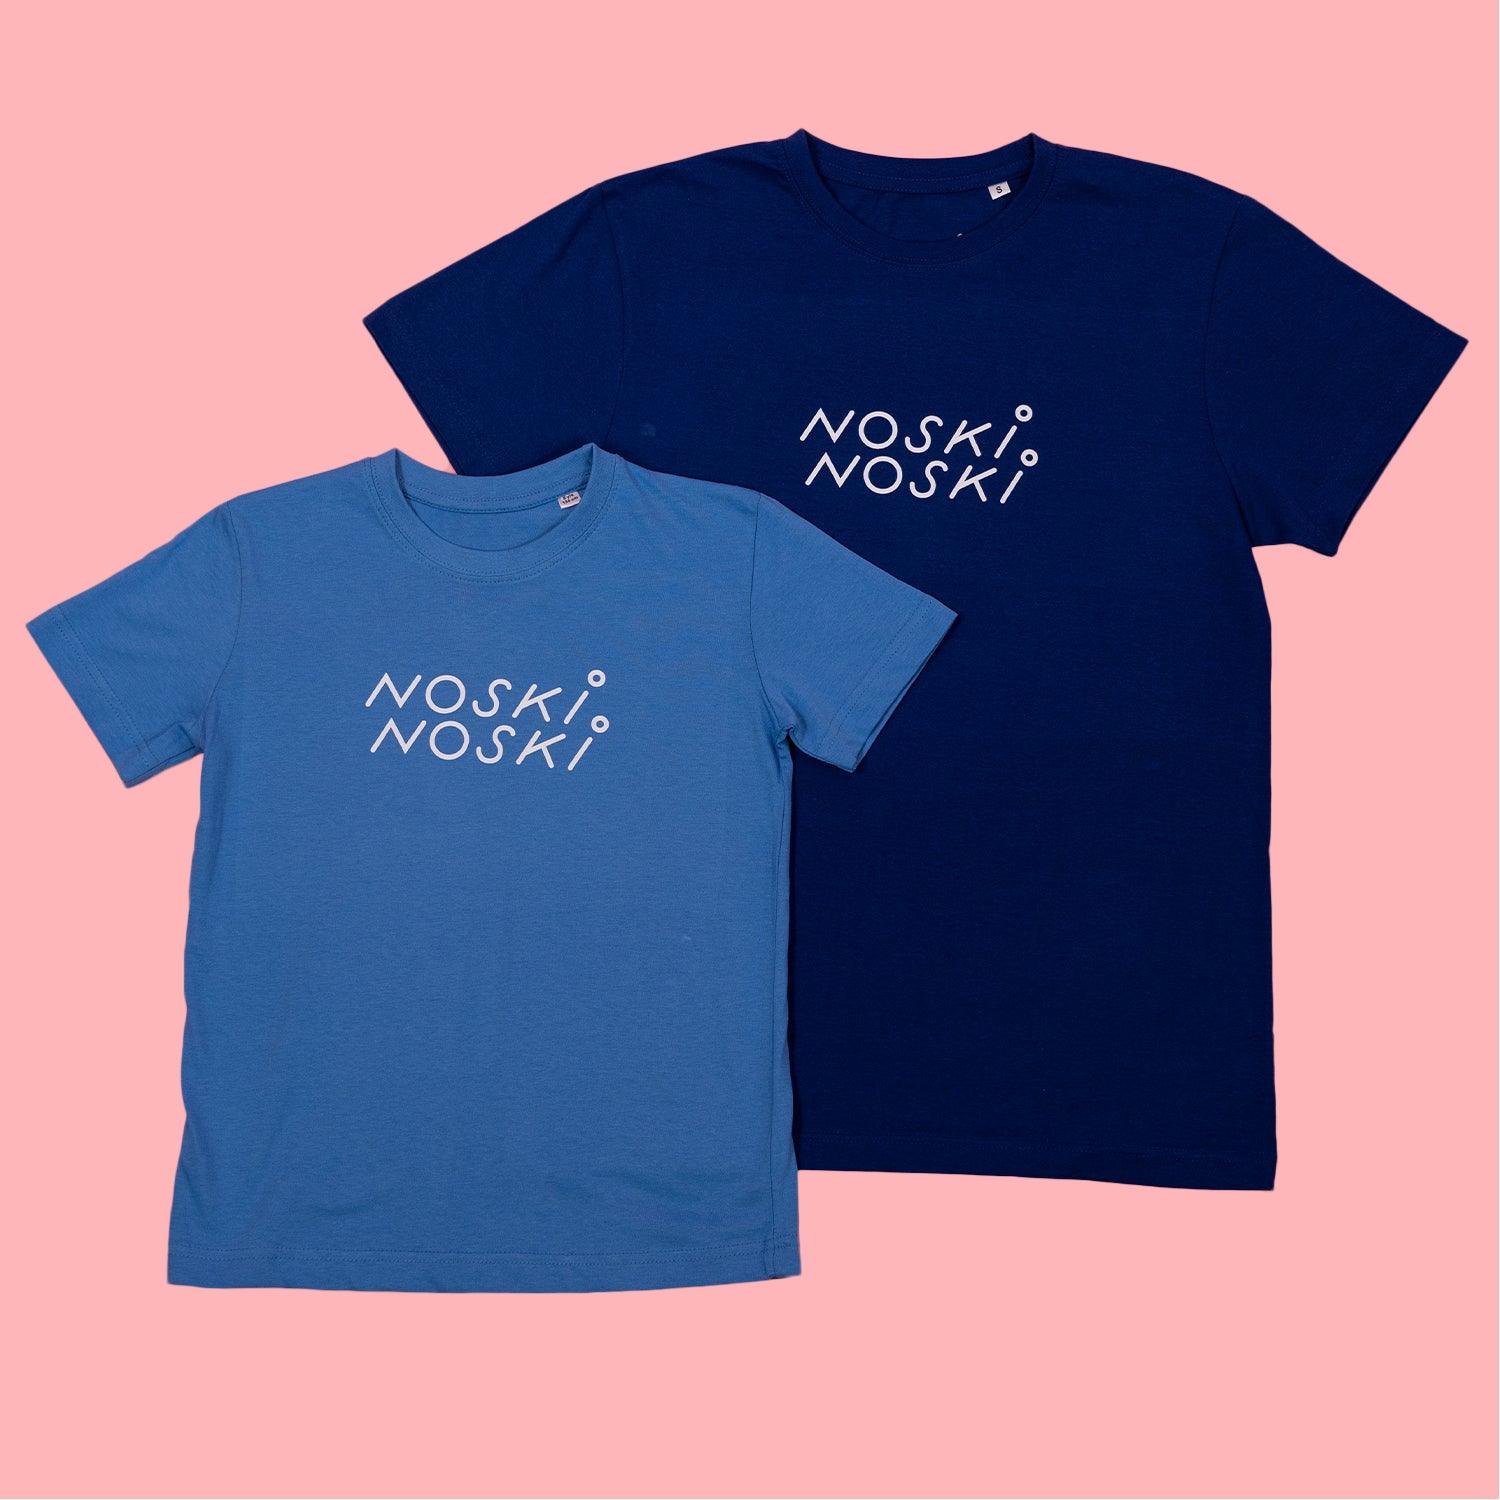 Noski Noski: NN baby shirt